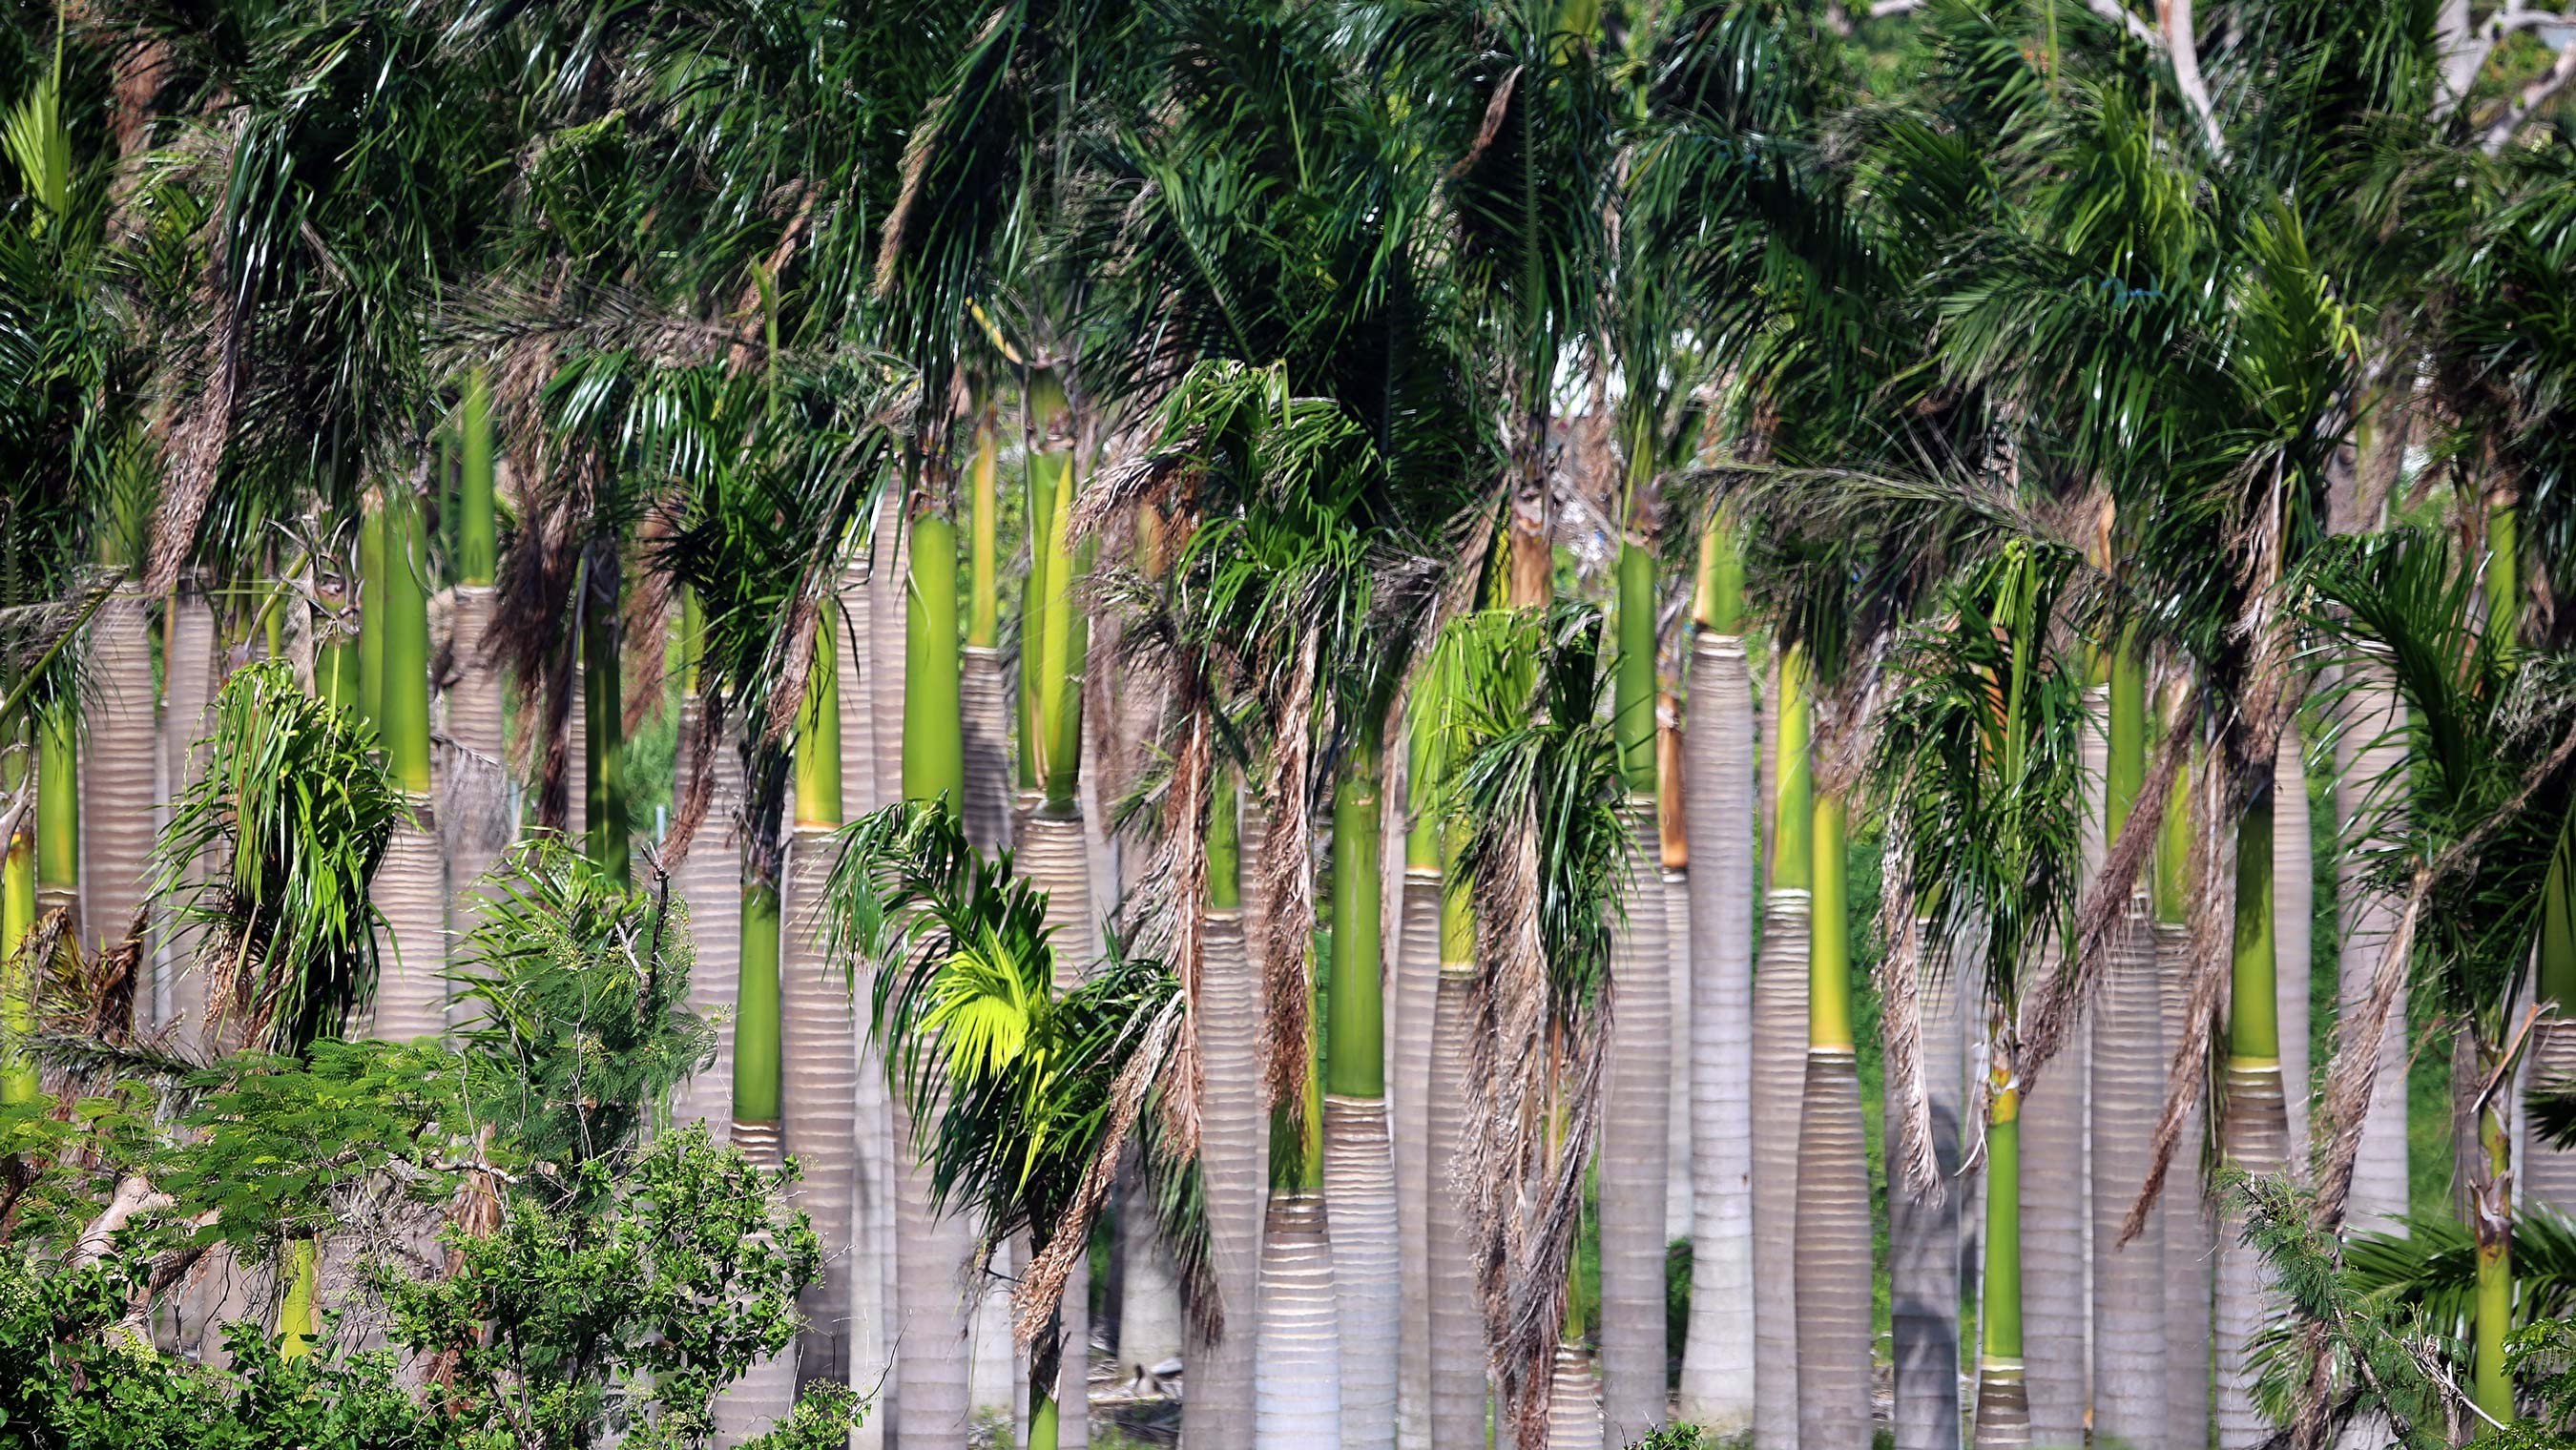 A palm tree grove at St. Croix, U.S. Virgin Islands.